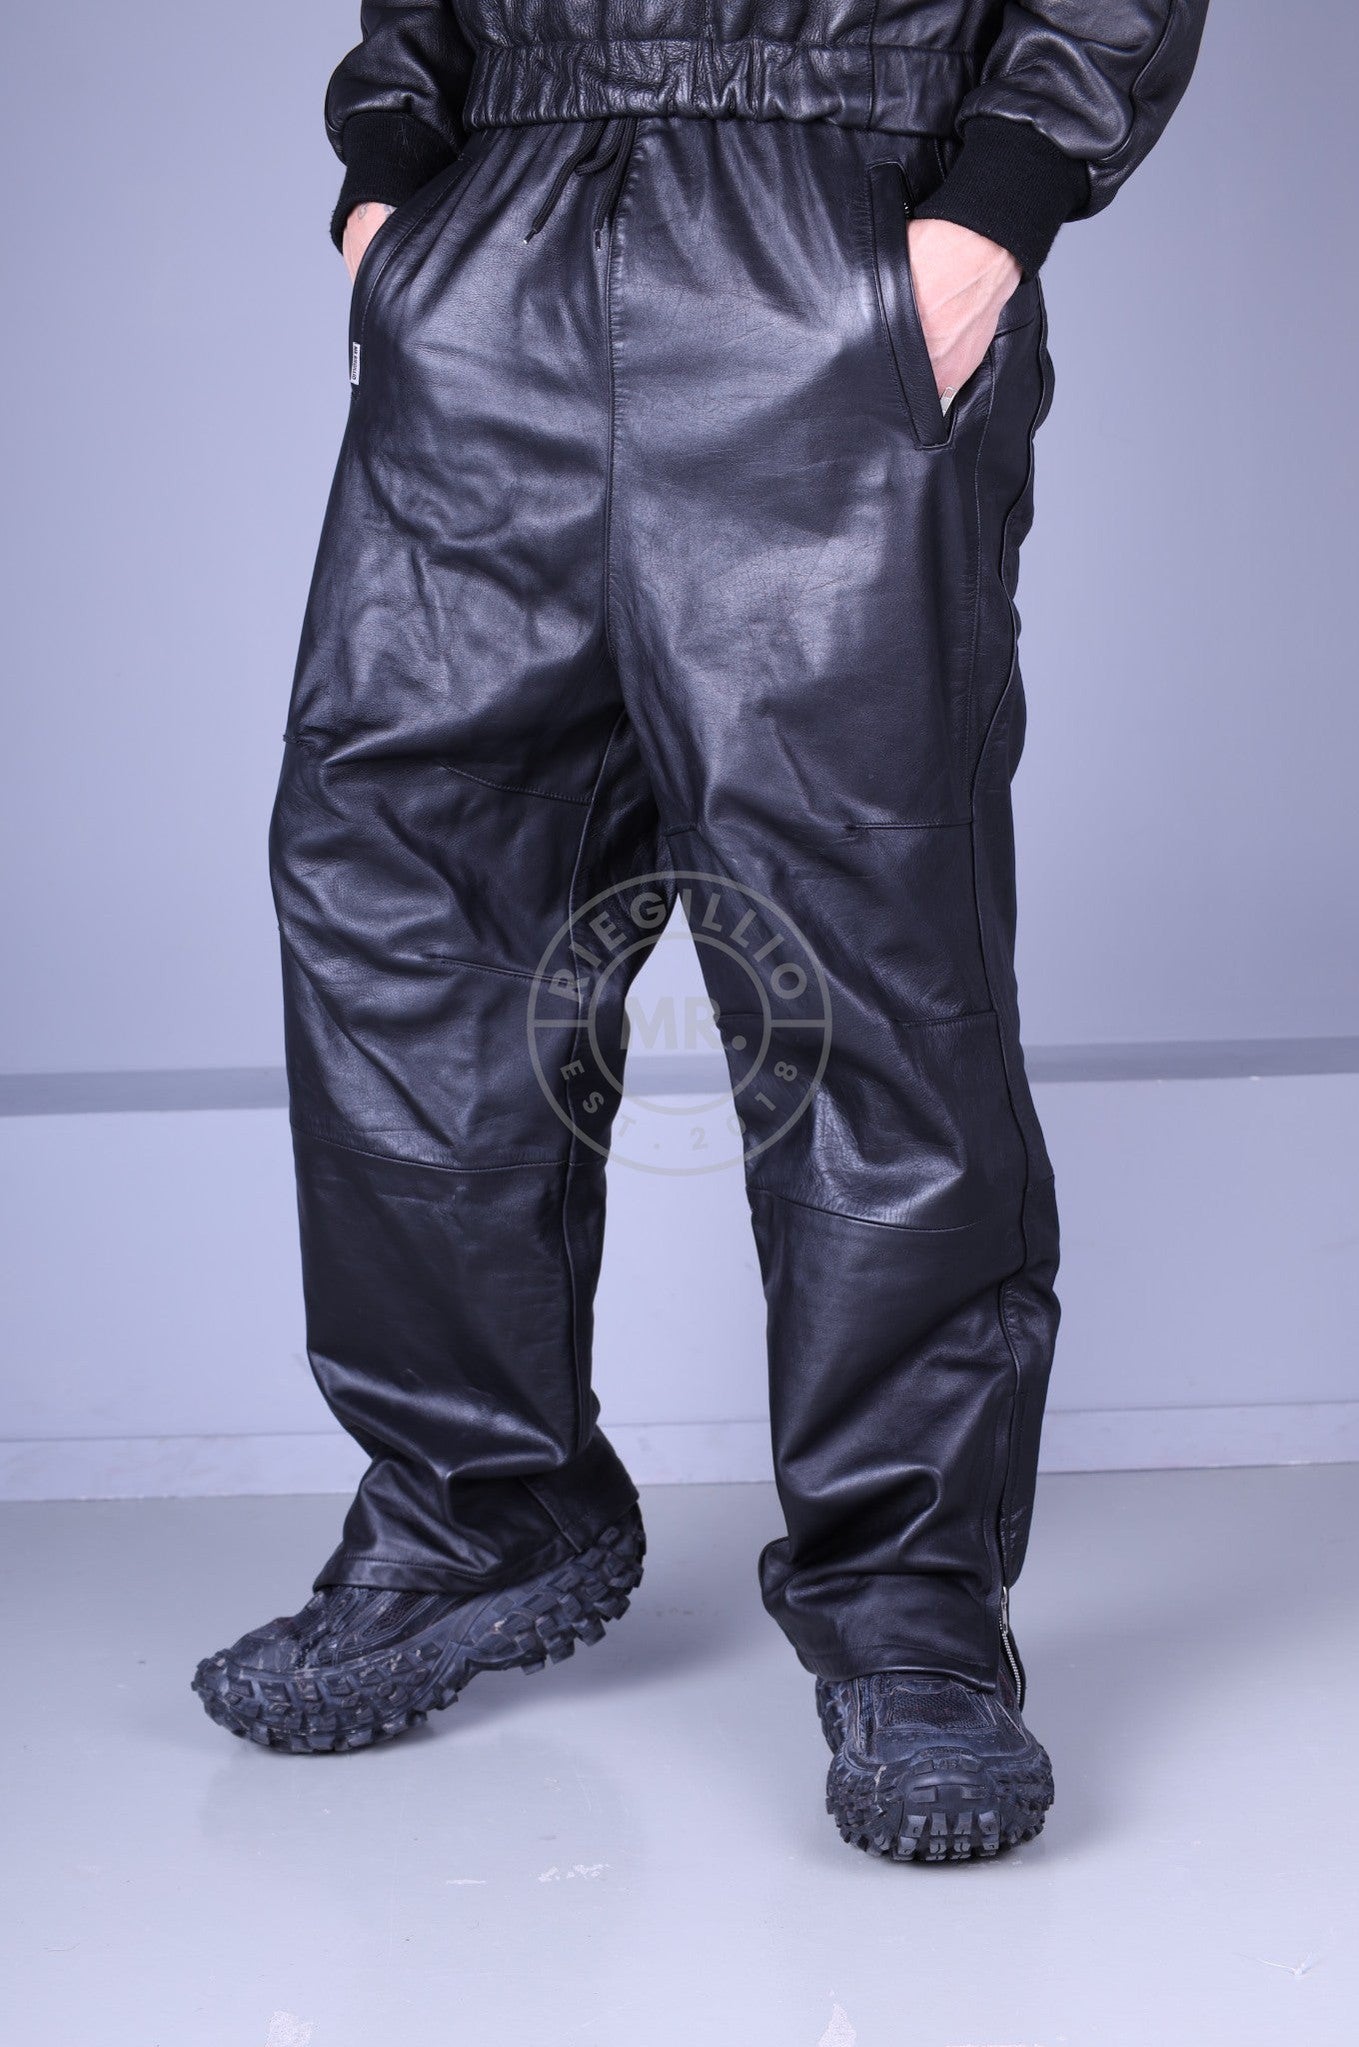 "Xtreme" Leather Pants - Full Black